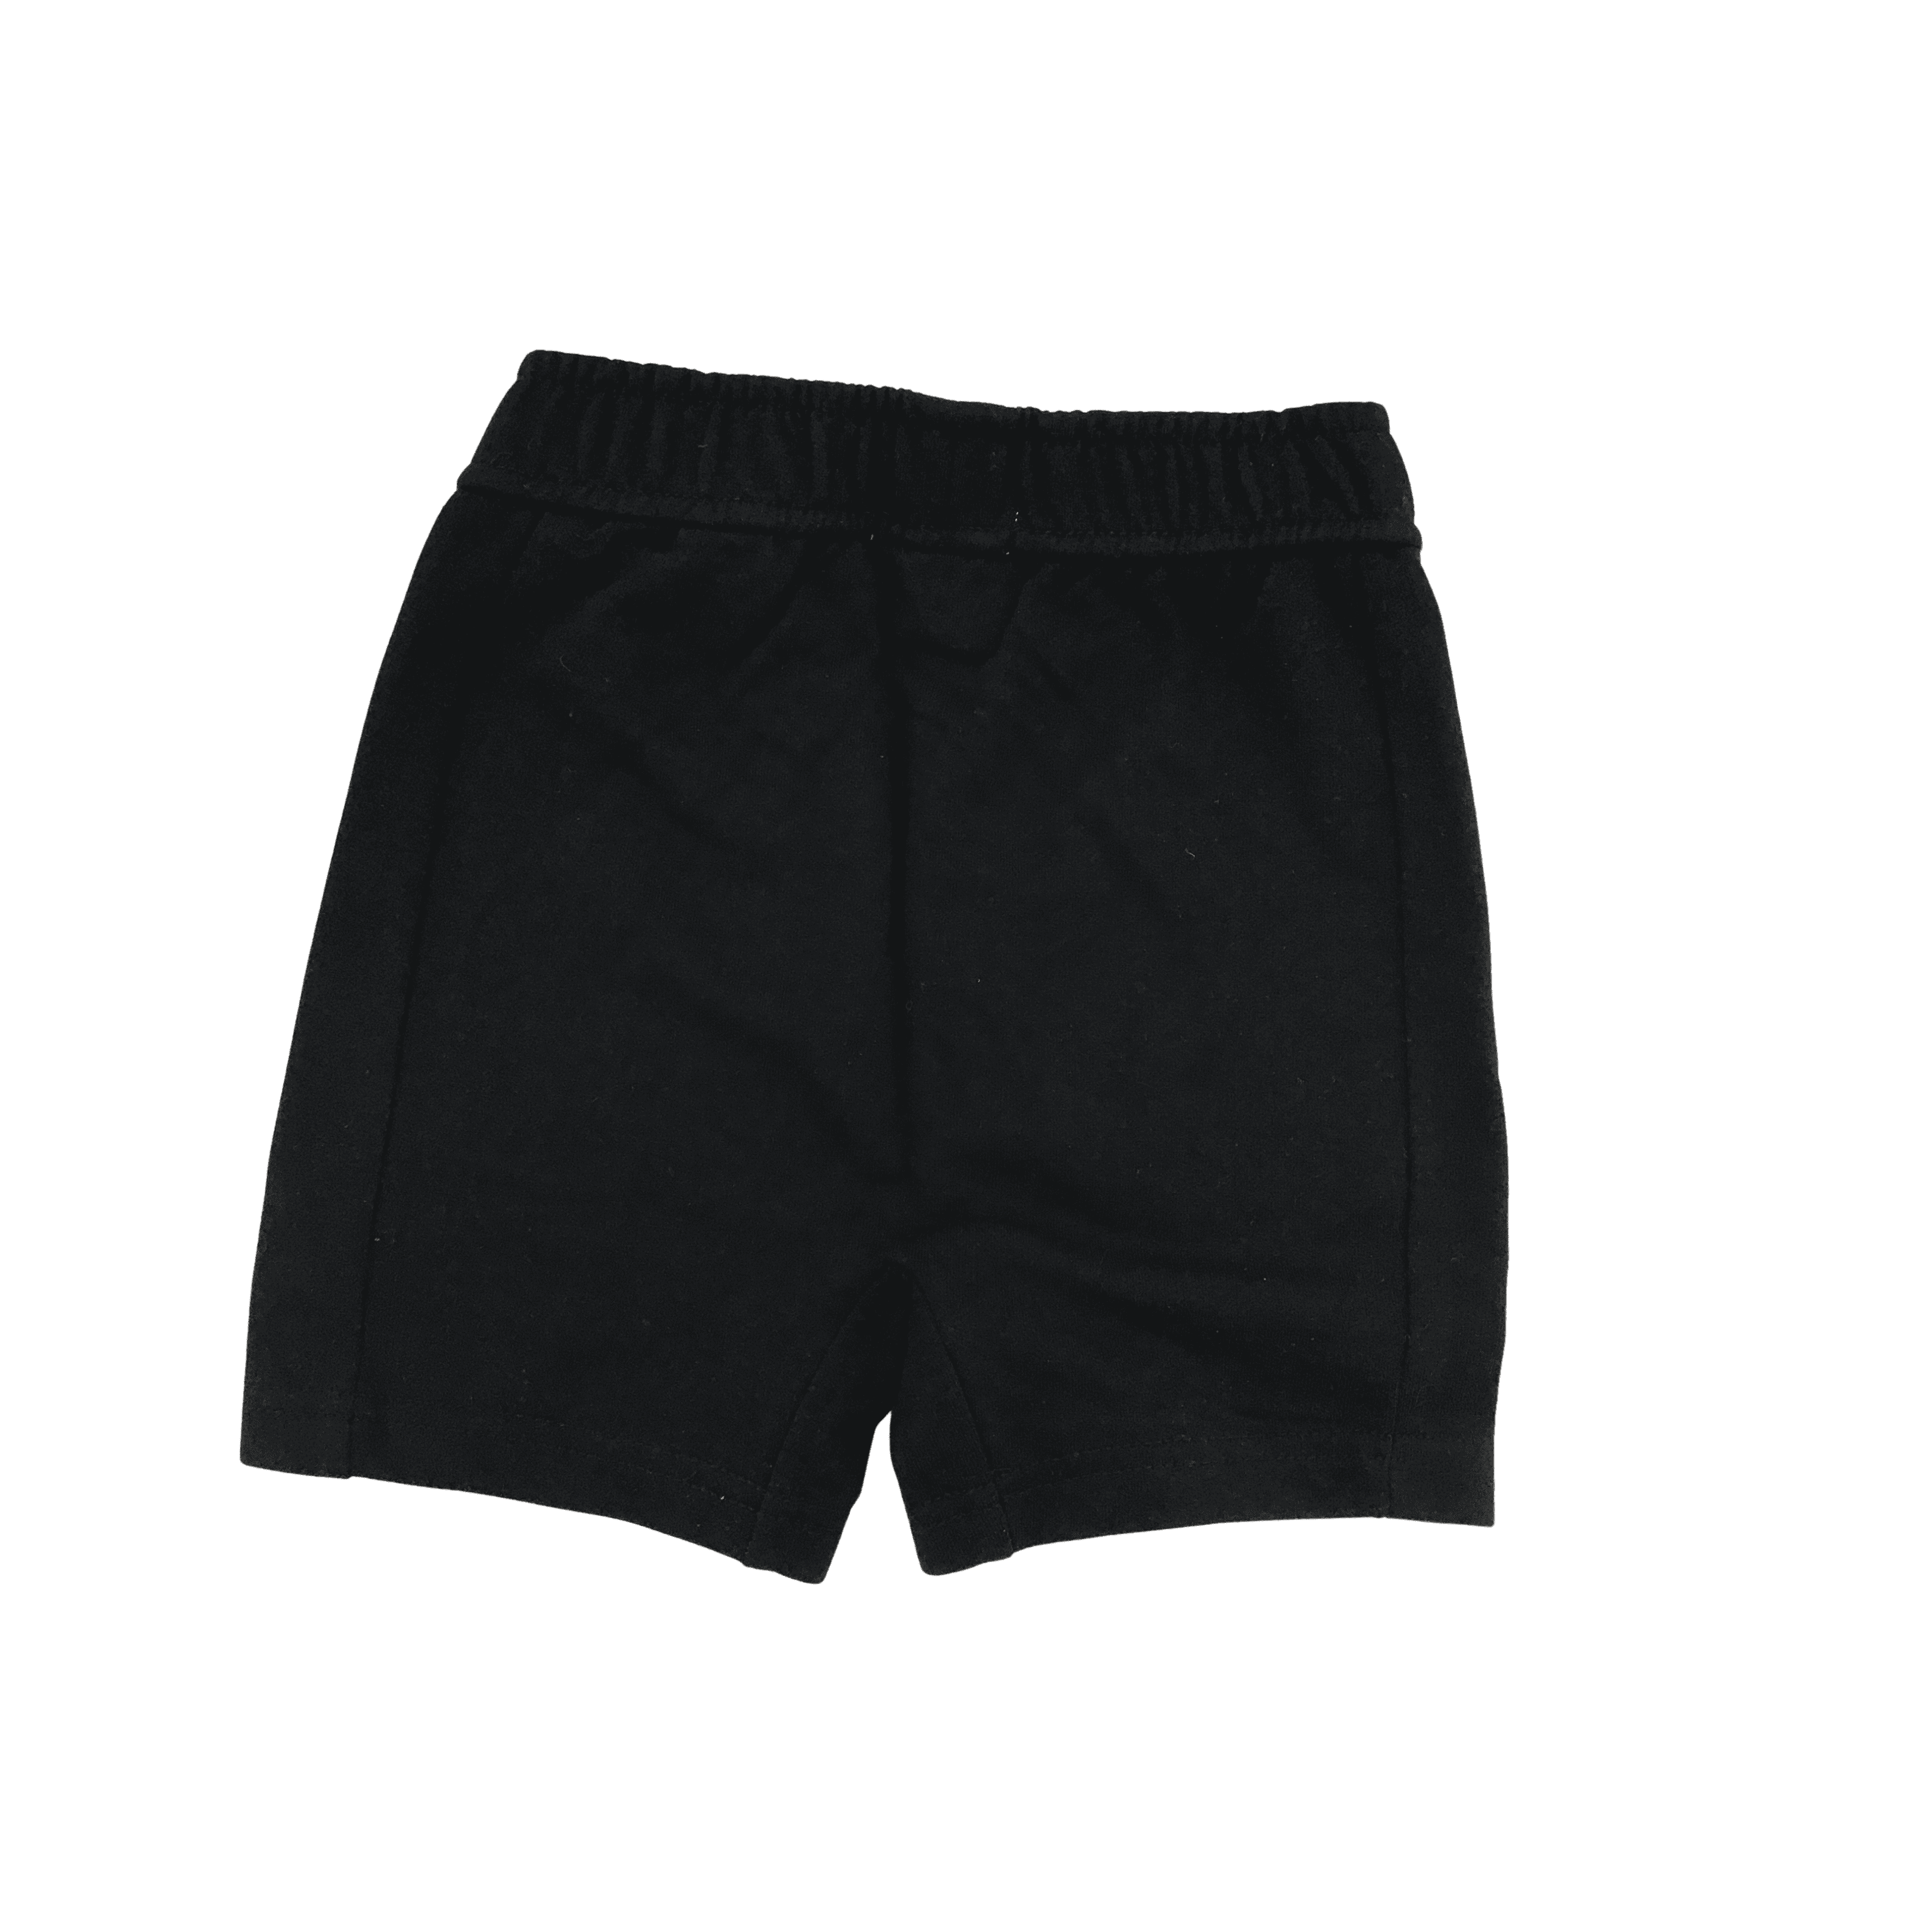 Epic Threads Boy's Shorts: Black/Size 2T